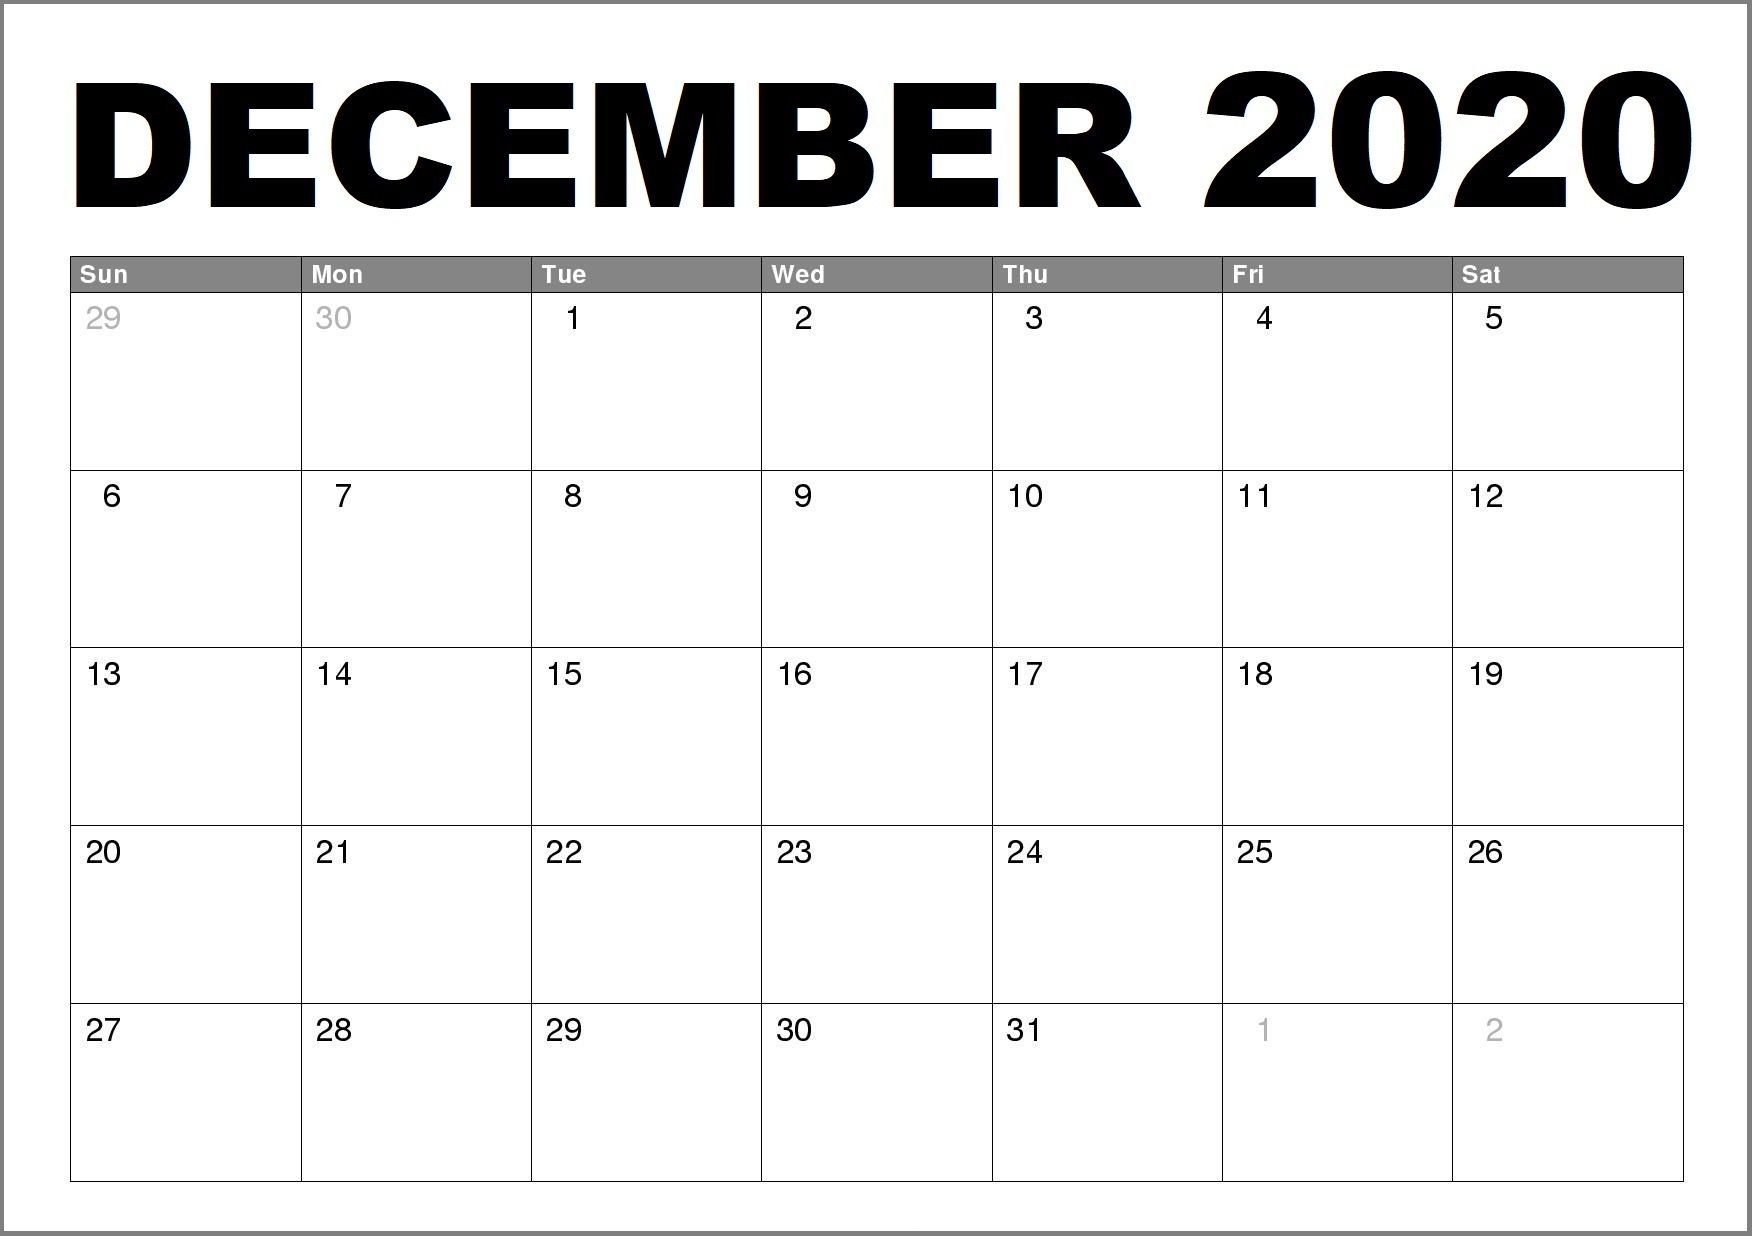 December Calendar Cute Desktop Wallpaper 2020 Printable Blank Holidays Calendar Wishes Image